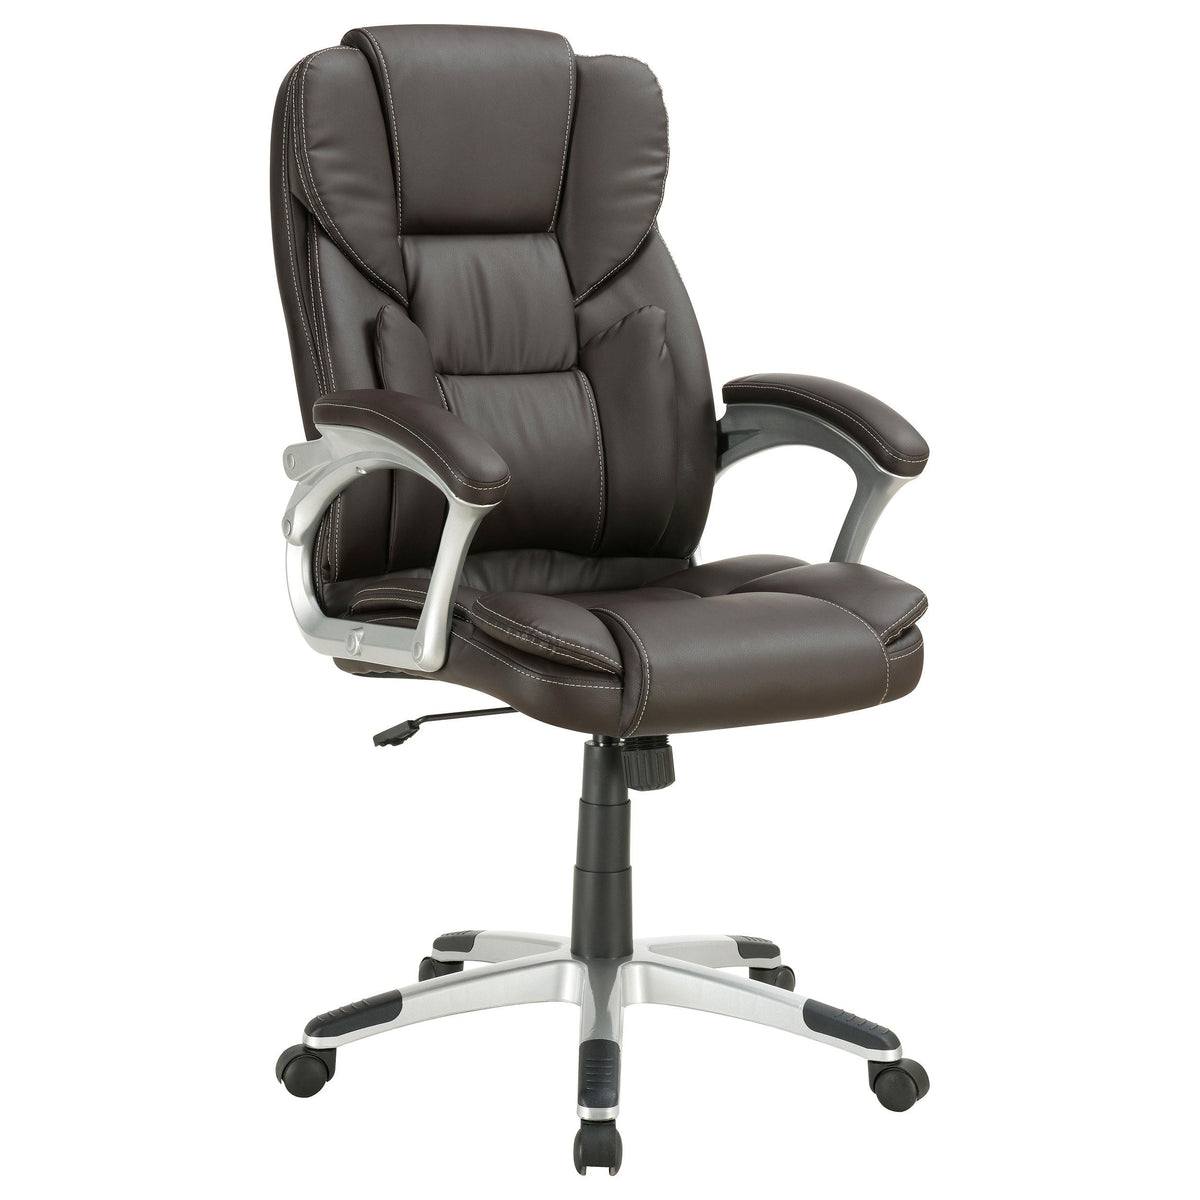 Kaffir Adjustable Height Office Chair Dark Brown and Silver  Half Price Furniture